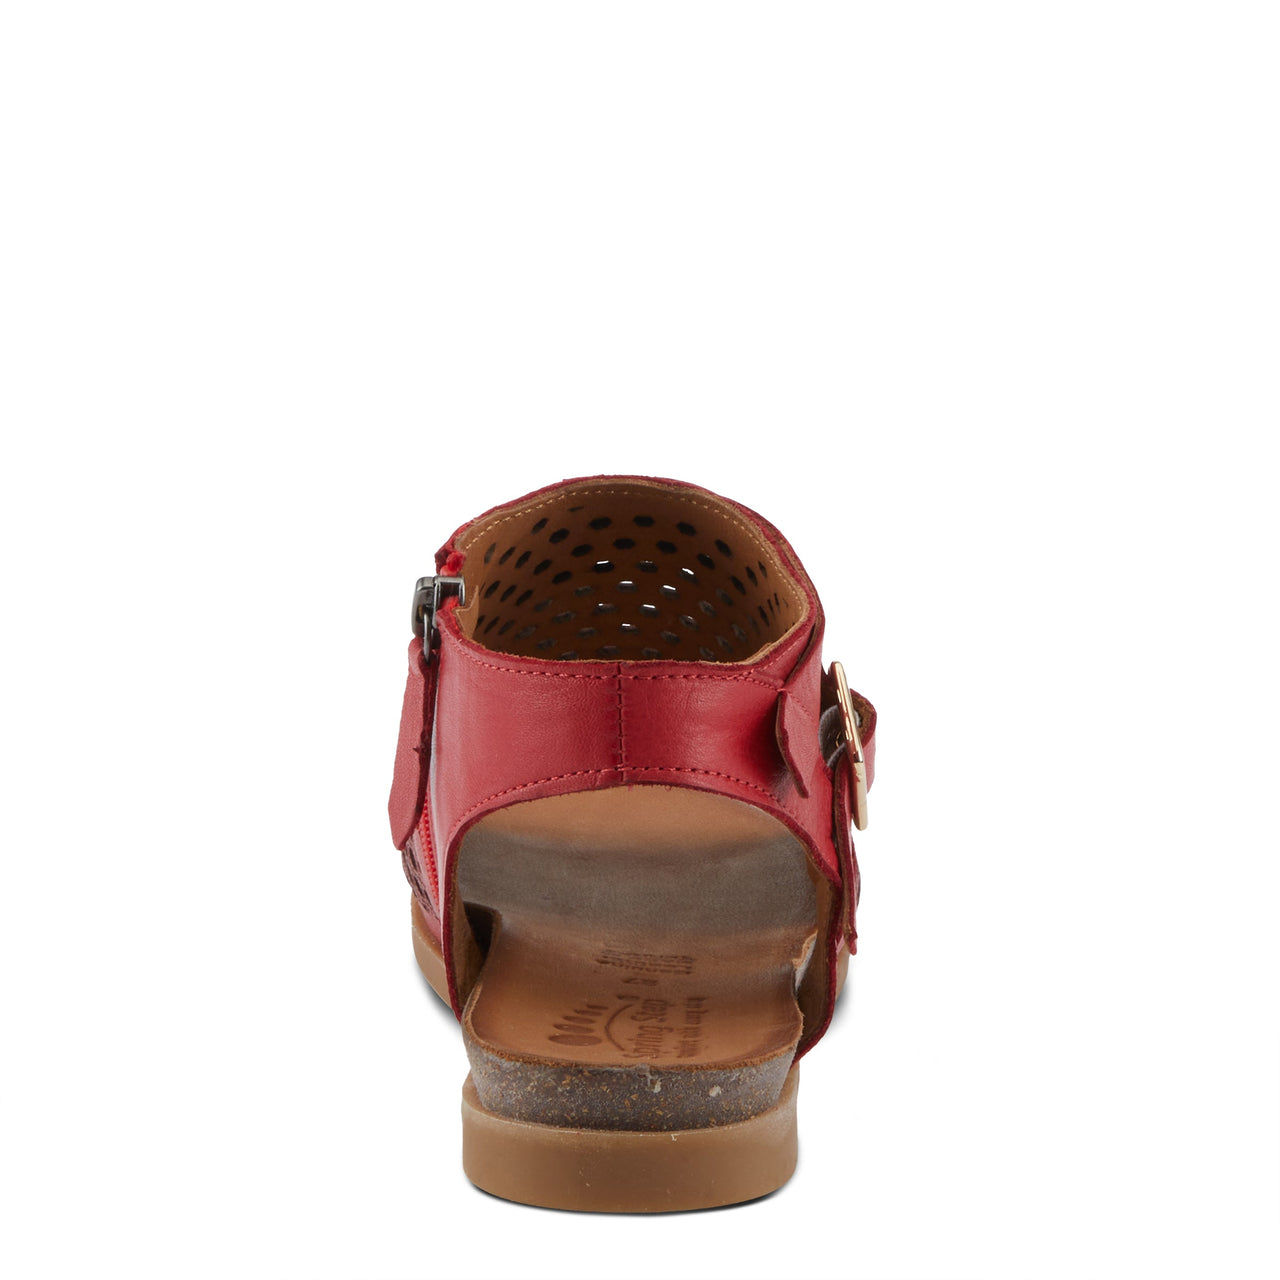 Black leather Spring Step Covington sandals with floral design and adjustable straps